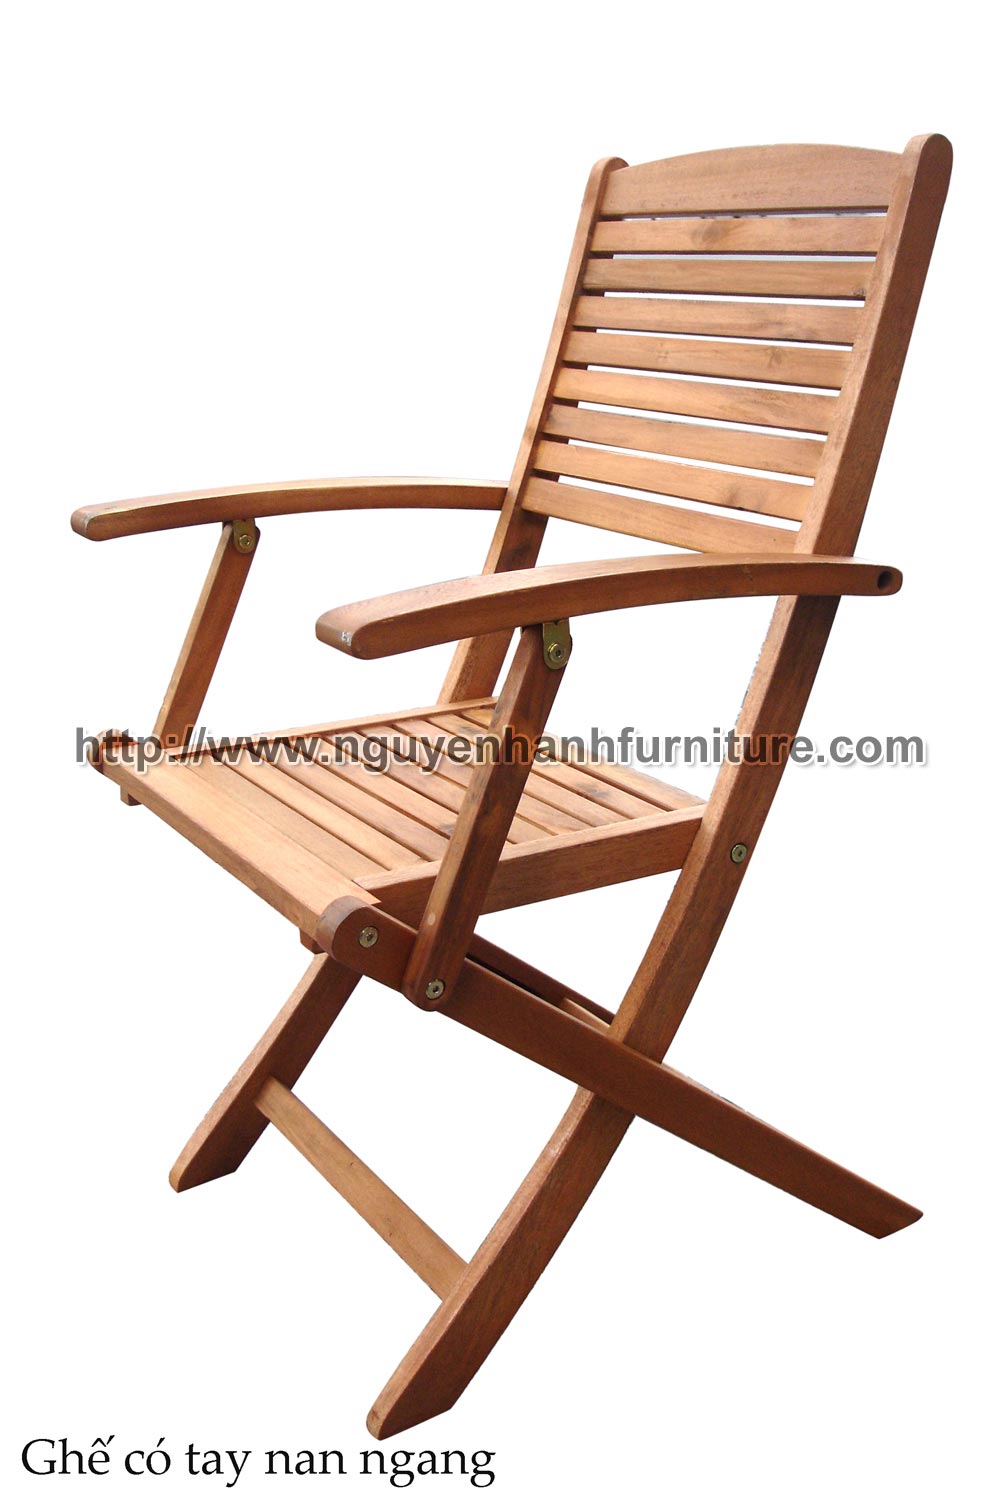 Name product: Chair with horizontal blades armrest - Dimensions:  - Description: Encalyptus wood